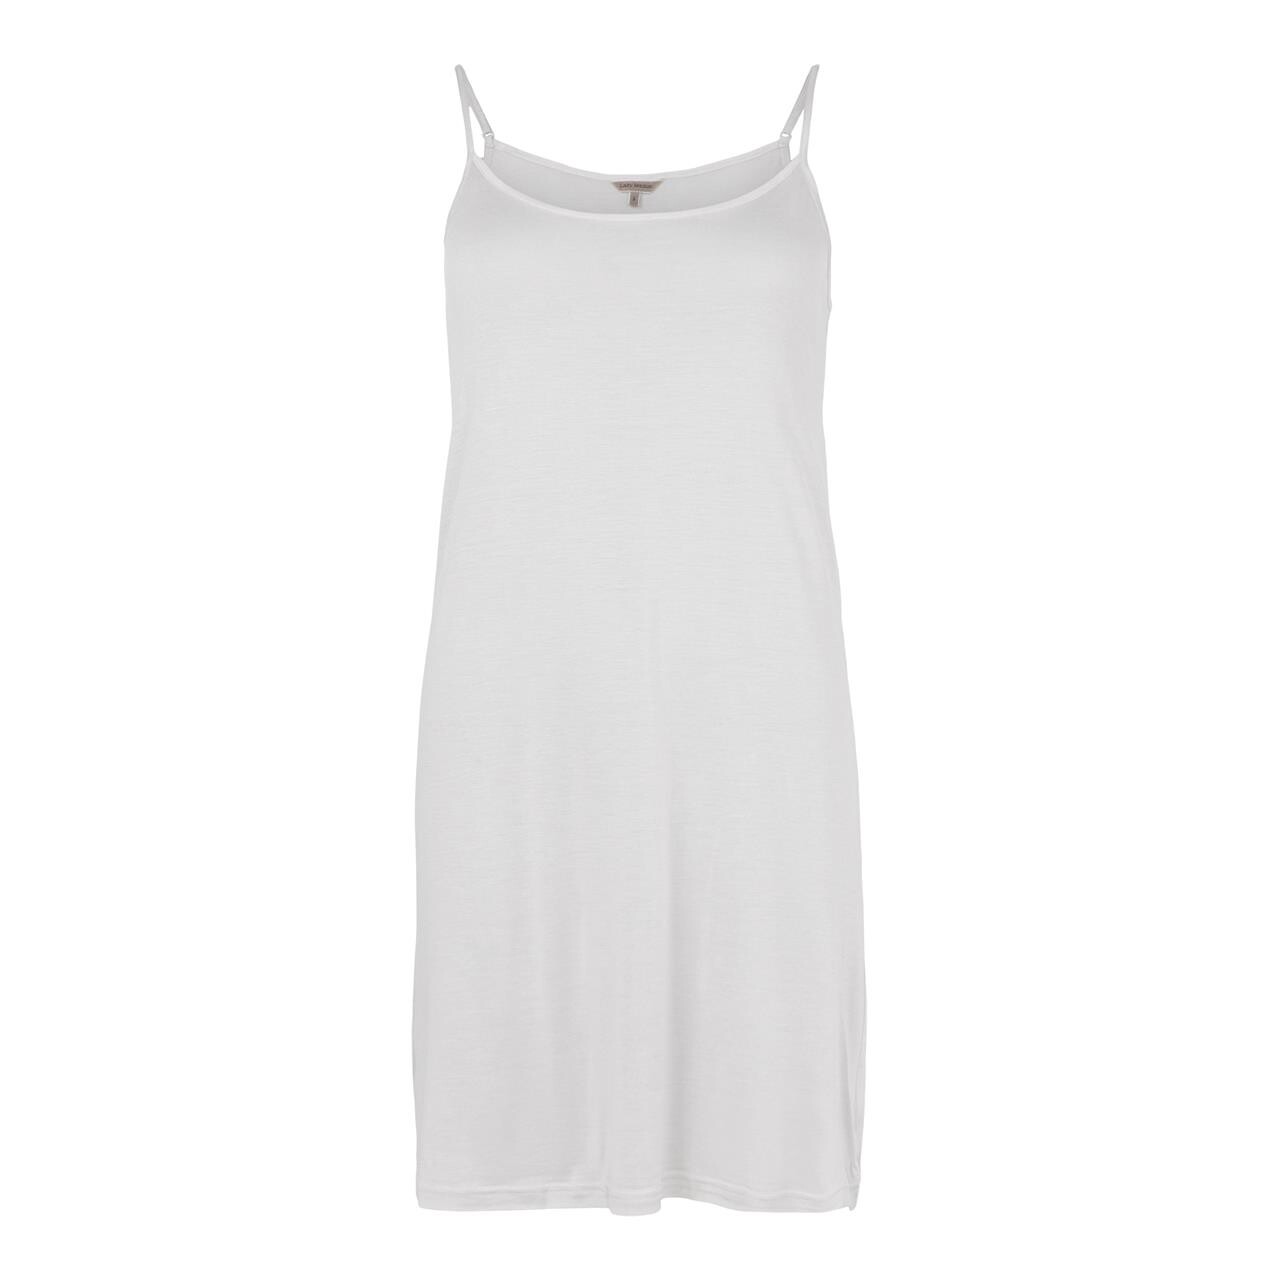 Lady Avenue Silk Jersey Underkjole -, Farve: Hvid, Størrelse: M, Dame